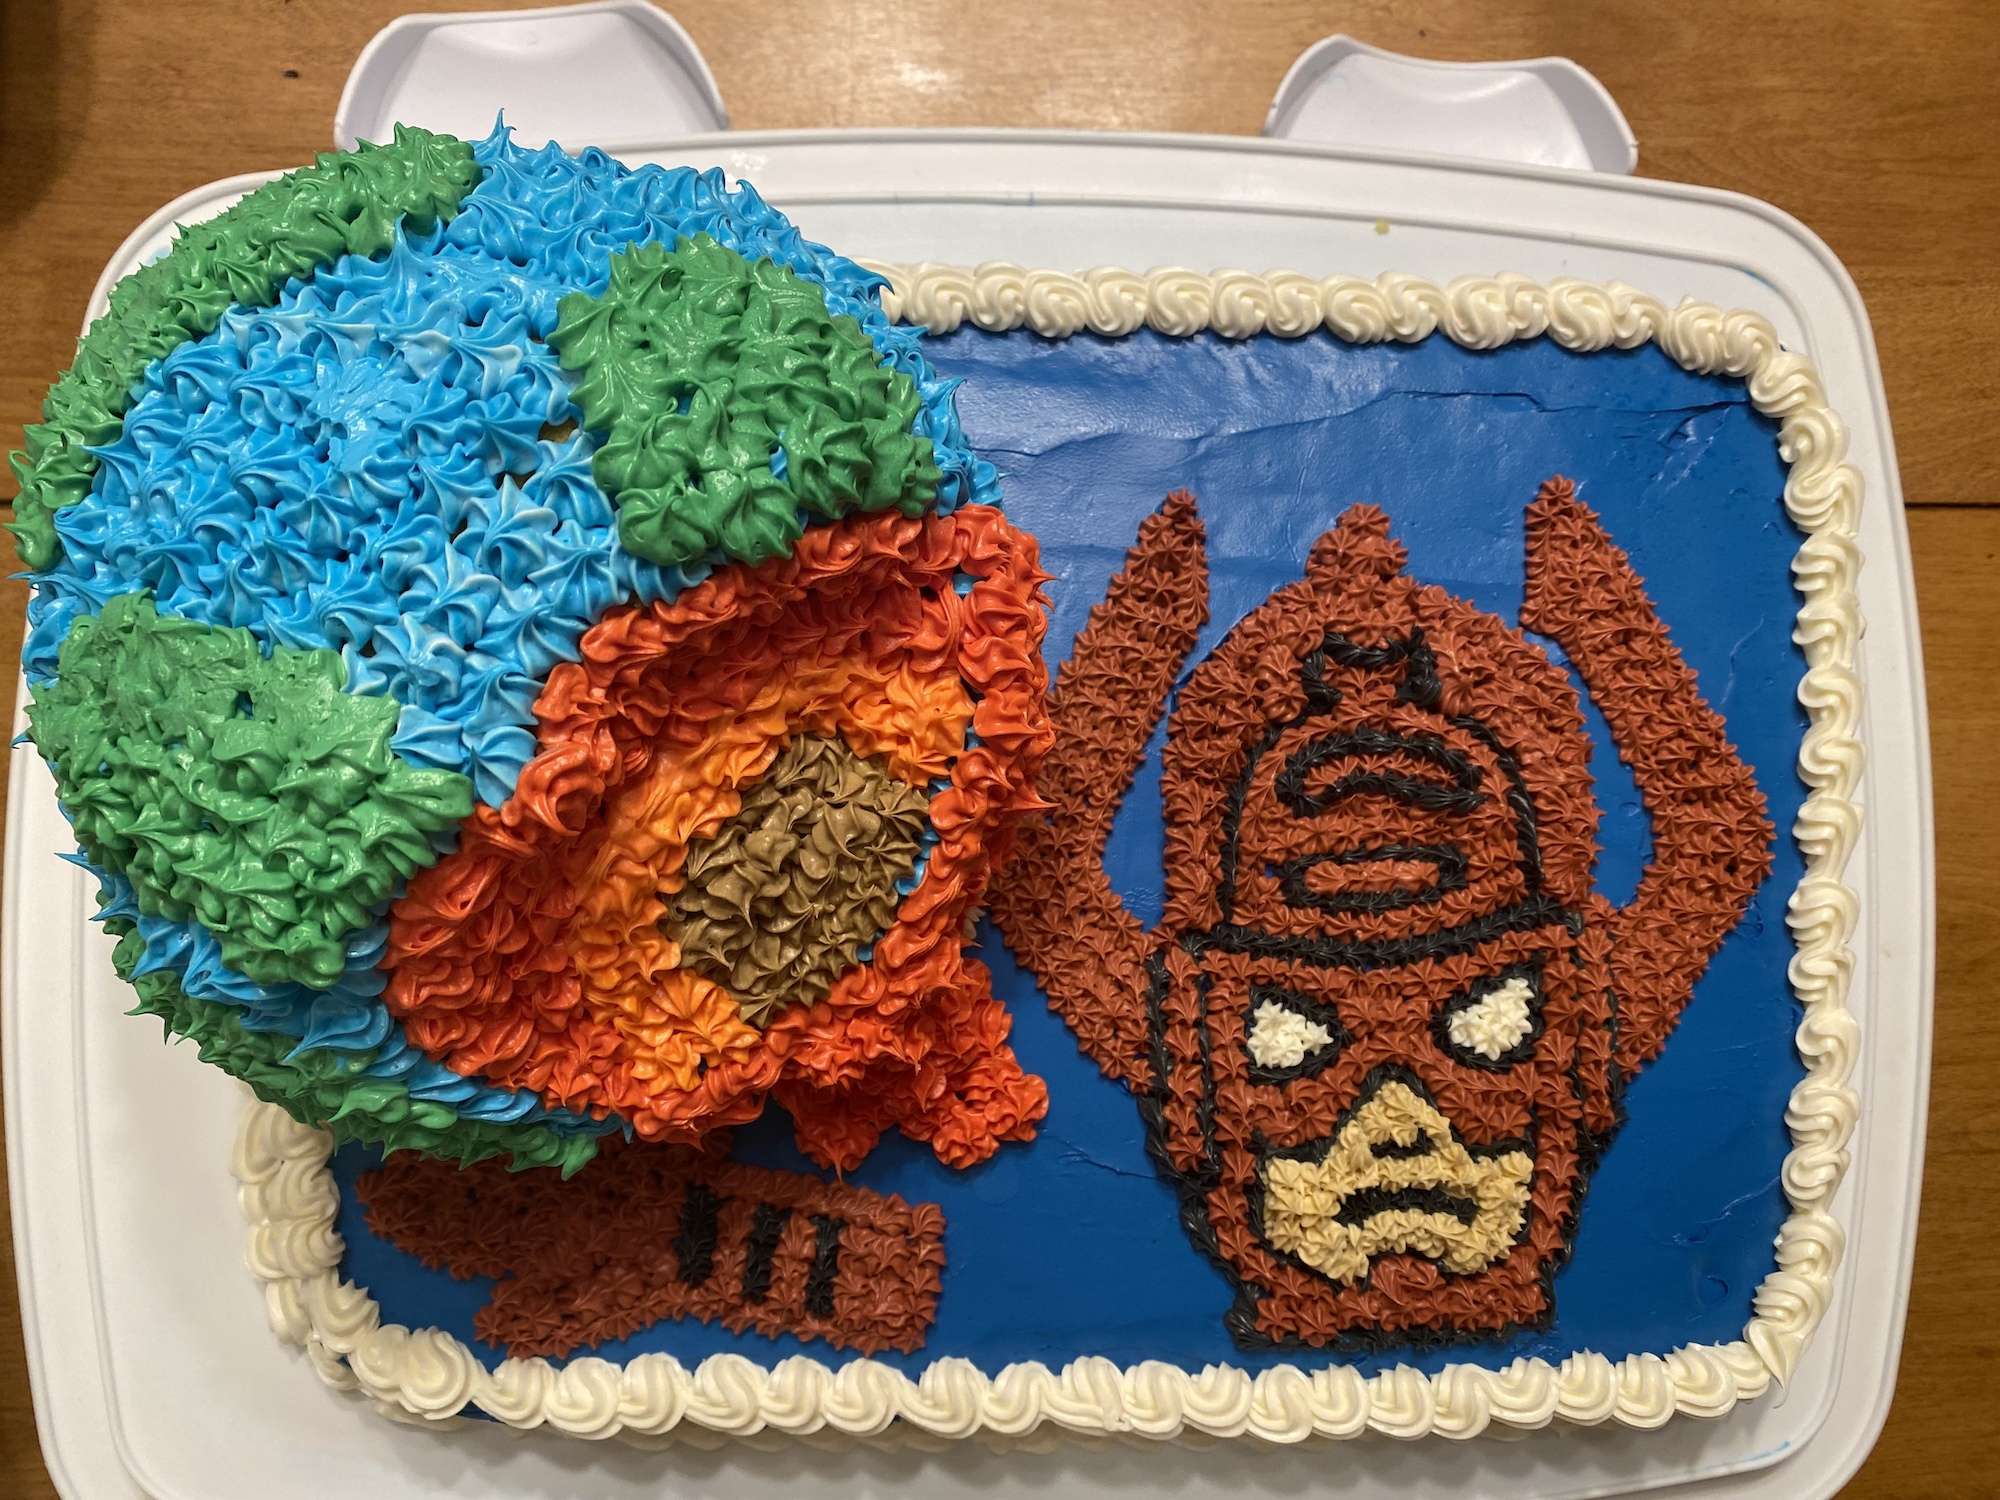 Galactus cake